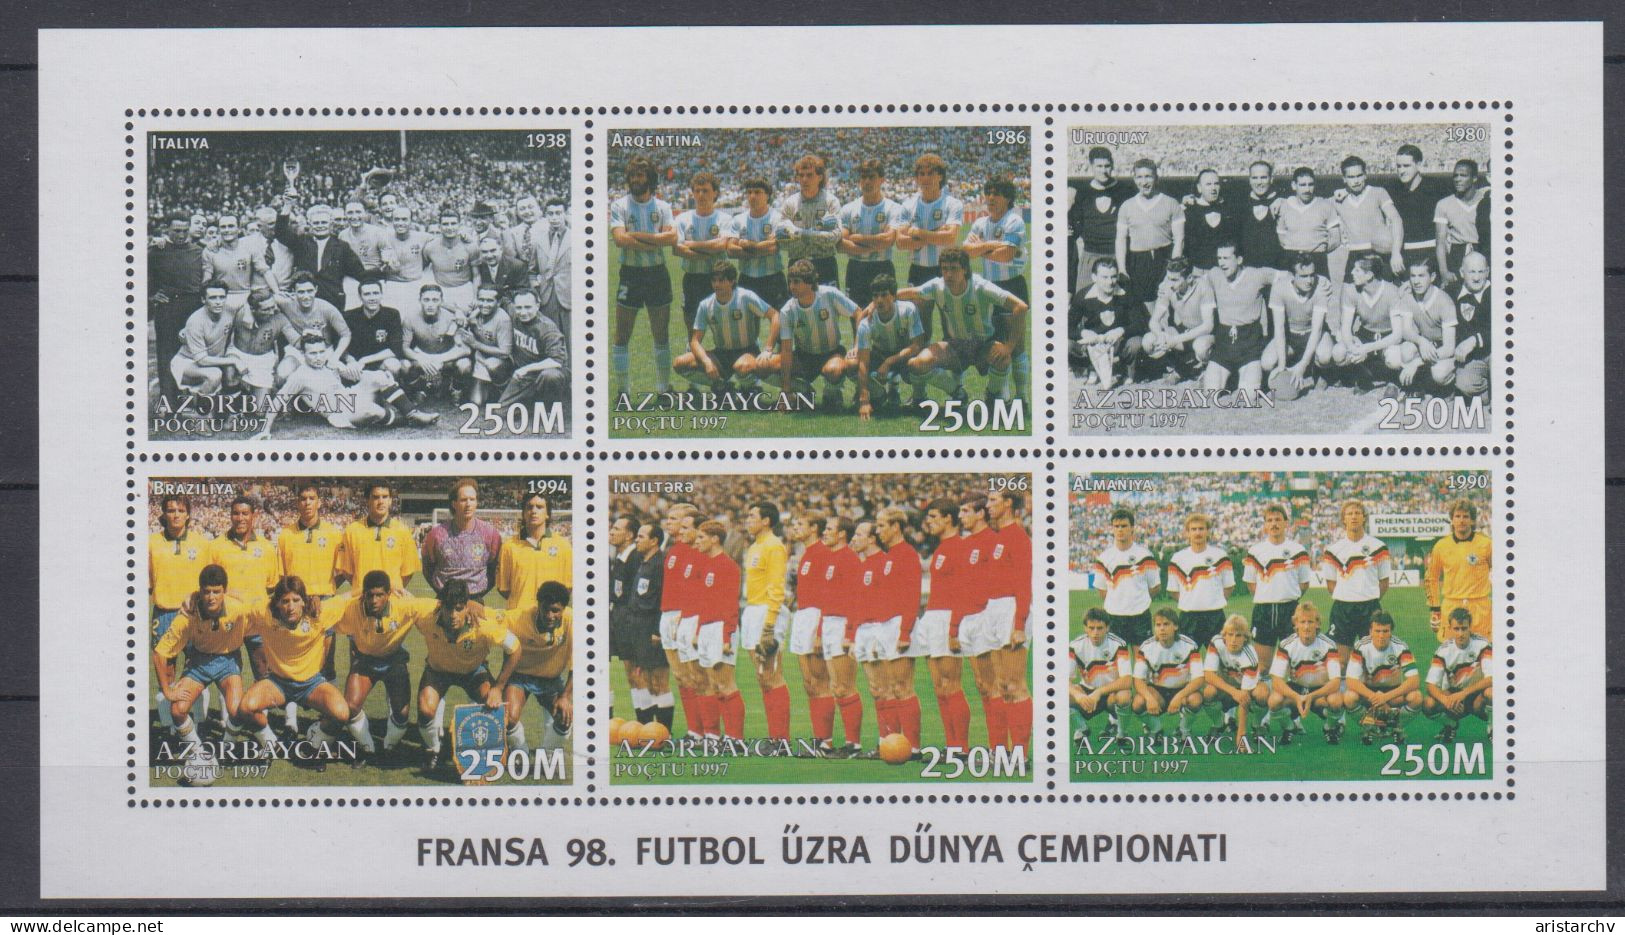 AZERBAIJAN 1998 FOOTBALL WORLD CUP SHEETLET AND S/SHEET - 1998 – Frankreich